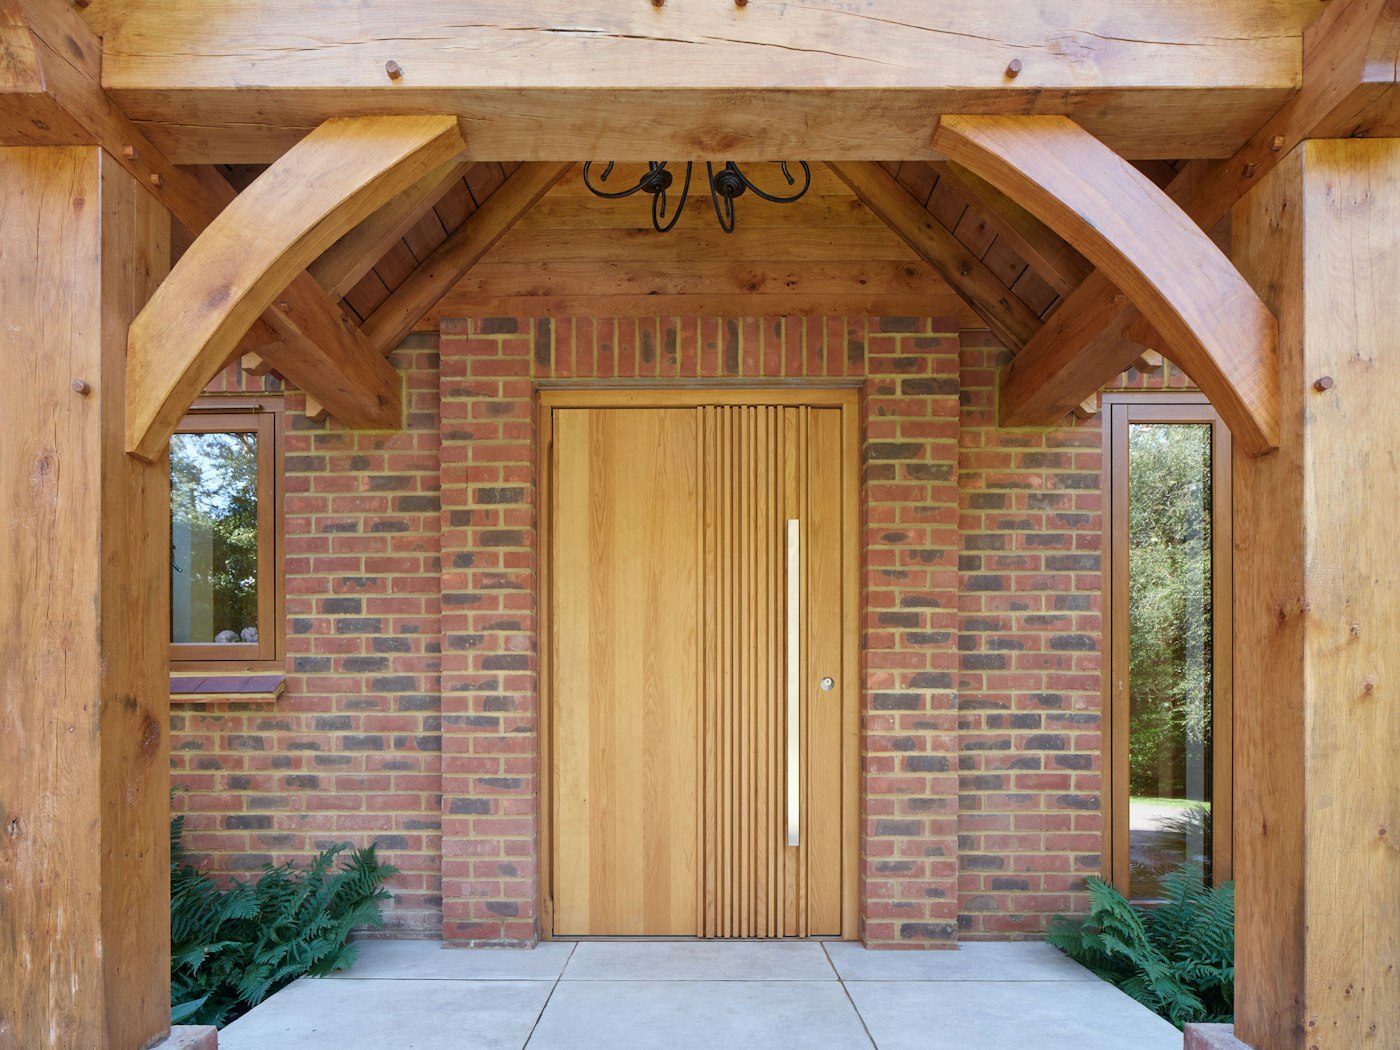 The tones of the oak beams, Bari door and windows work well together